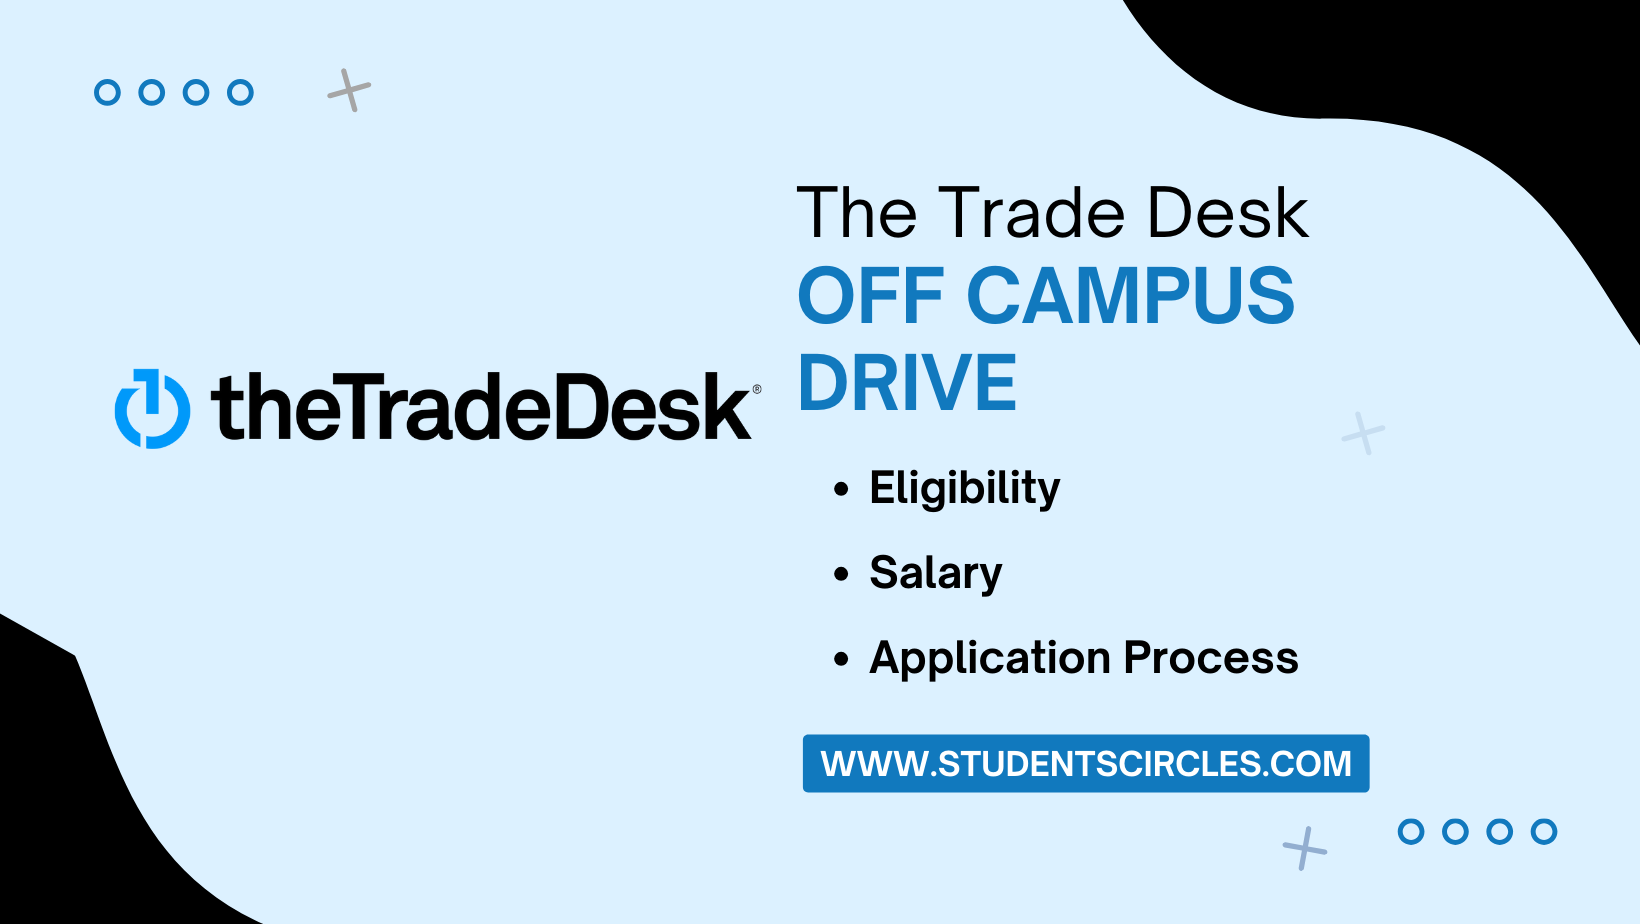 The Trade Desk Off Campus Drive